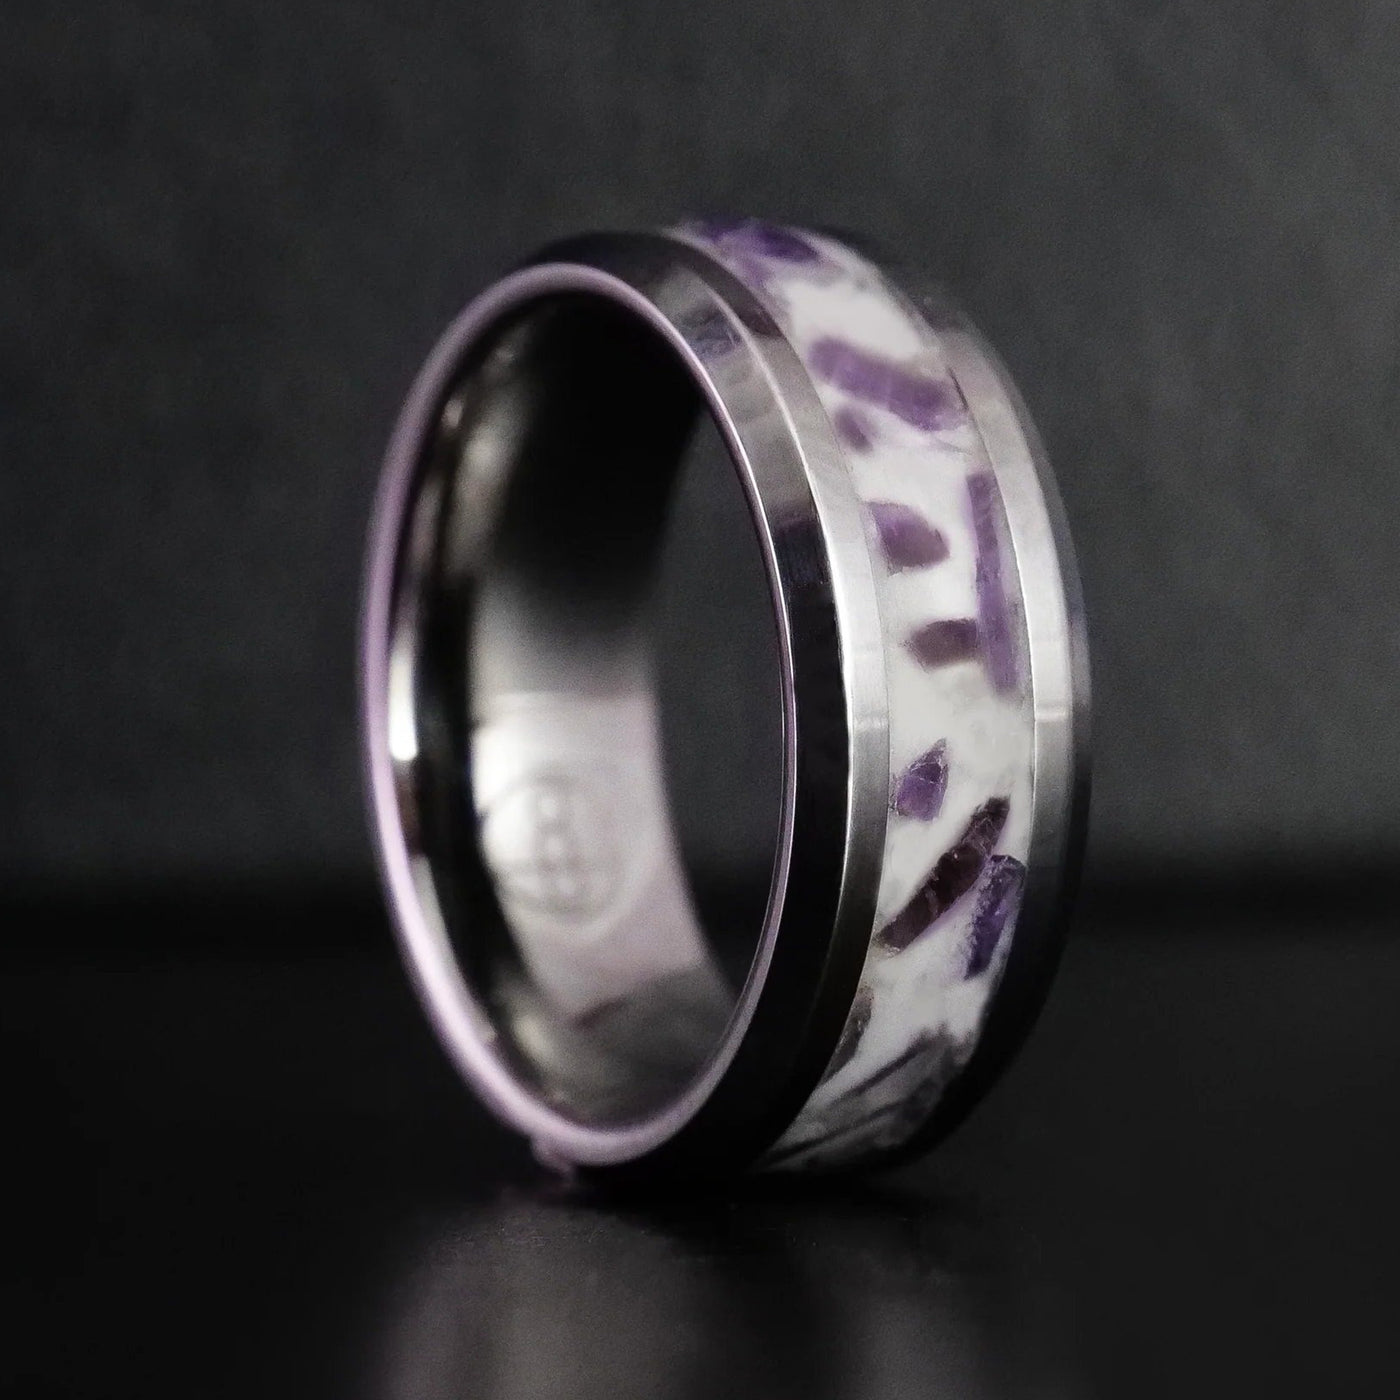 February Birthstone Ring | Amethyst Glowstone Ring - Patrick Adair Designs